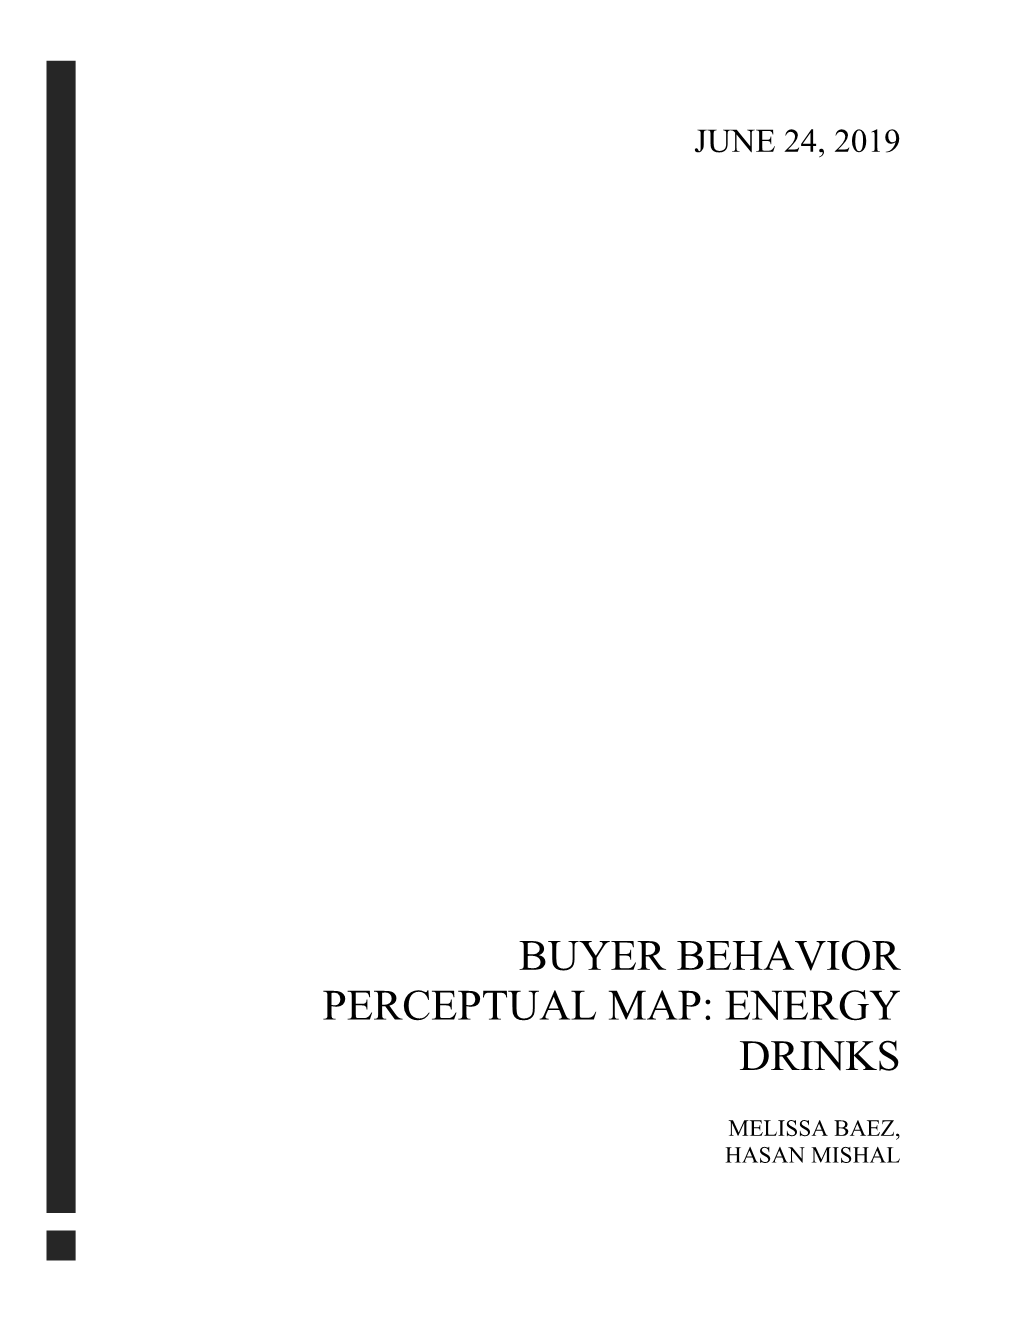 Buyer Behavior Perceptual Map: Energy Drinks